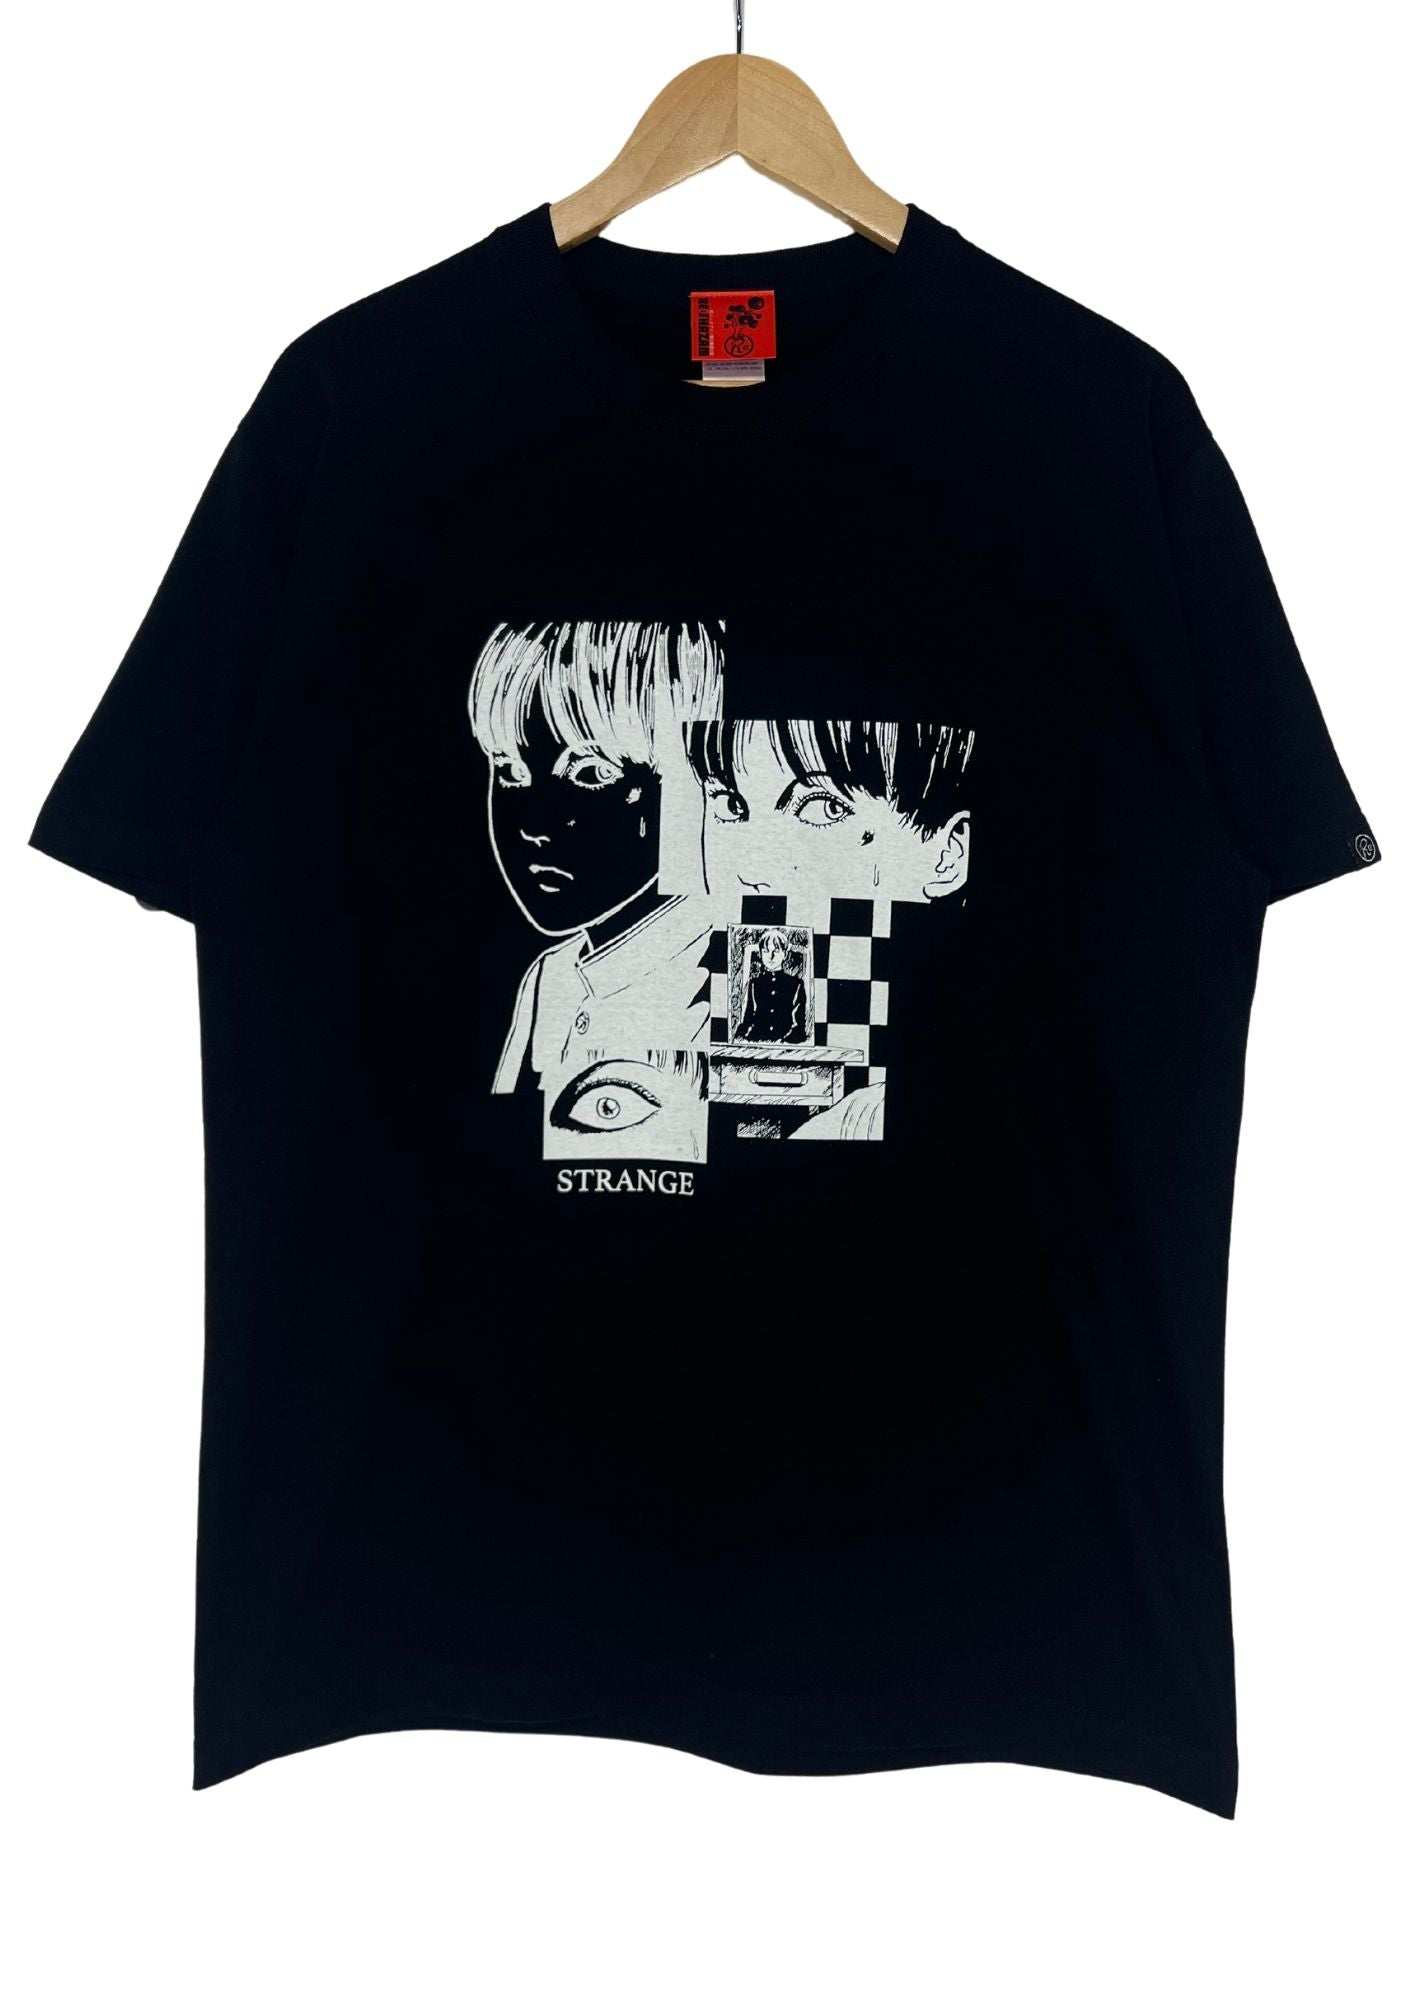 2020 Junji Ito 'Strange' x RE: SHAZAM T-shirt